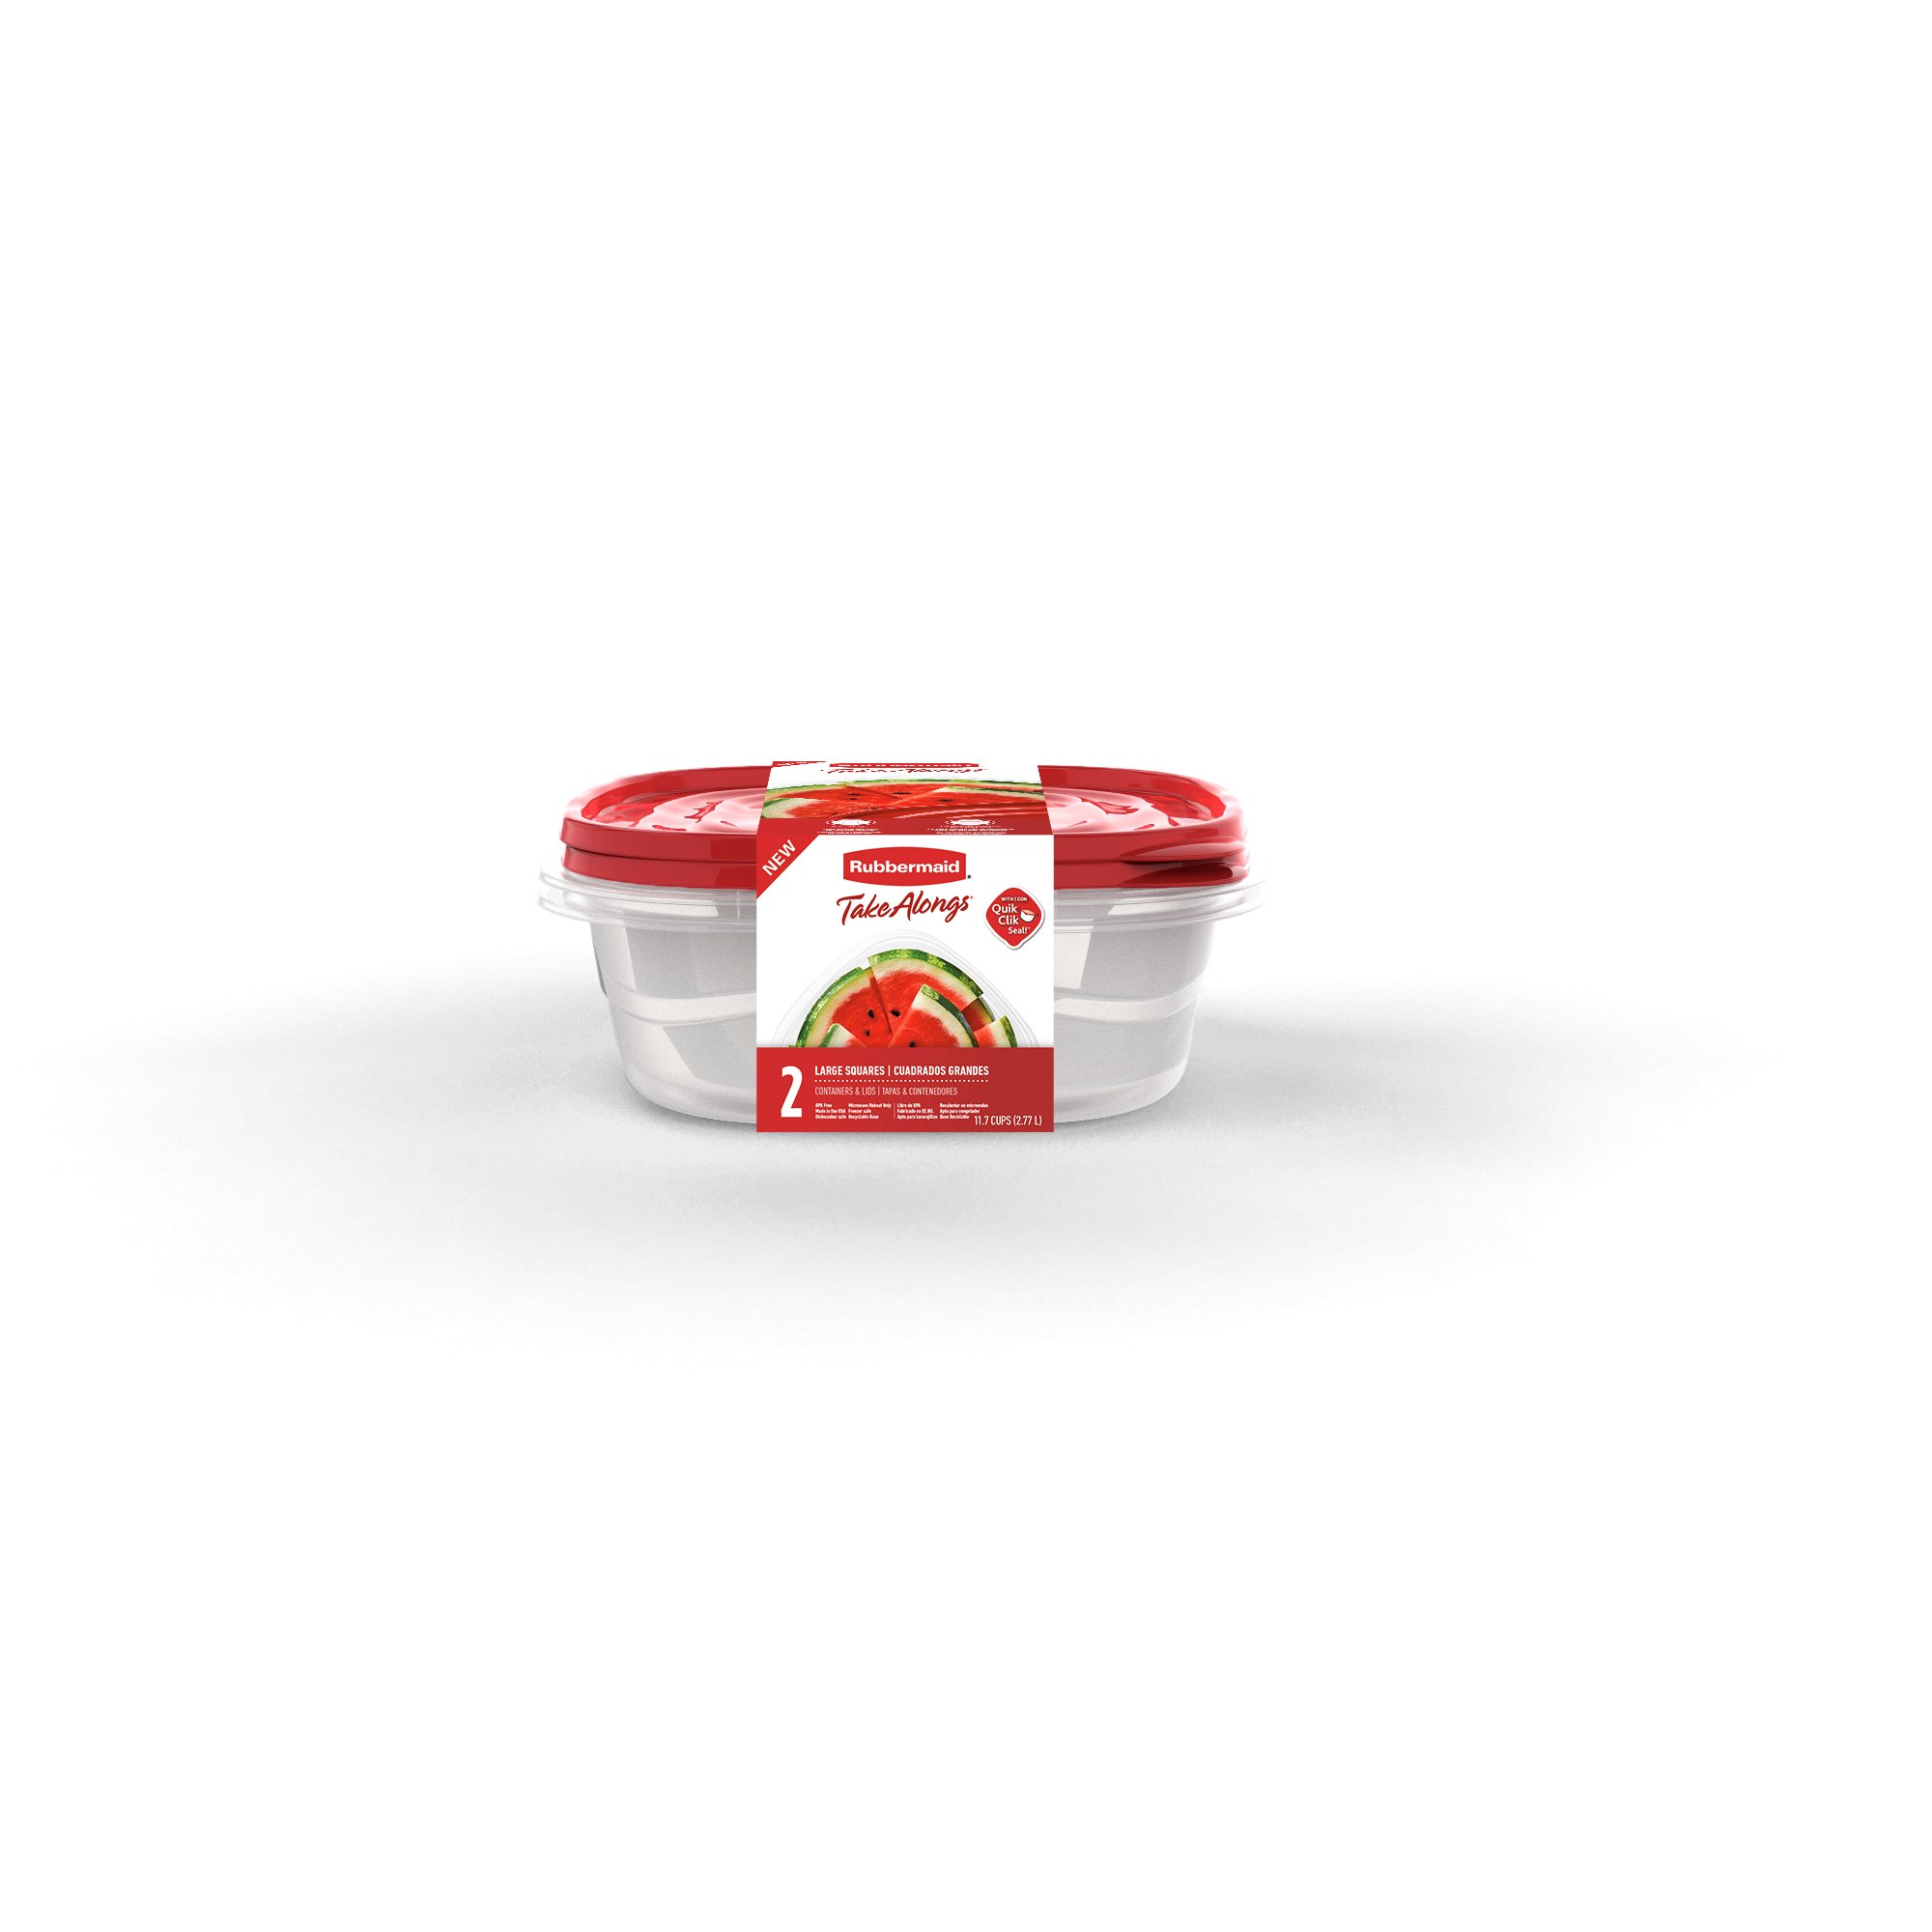 Rubbermaid® TakeAlongs® Square BPA-Free Plastic Snap Seal Food